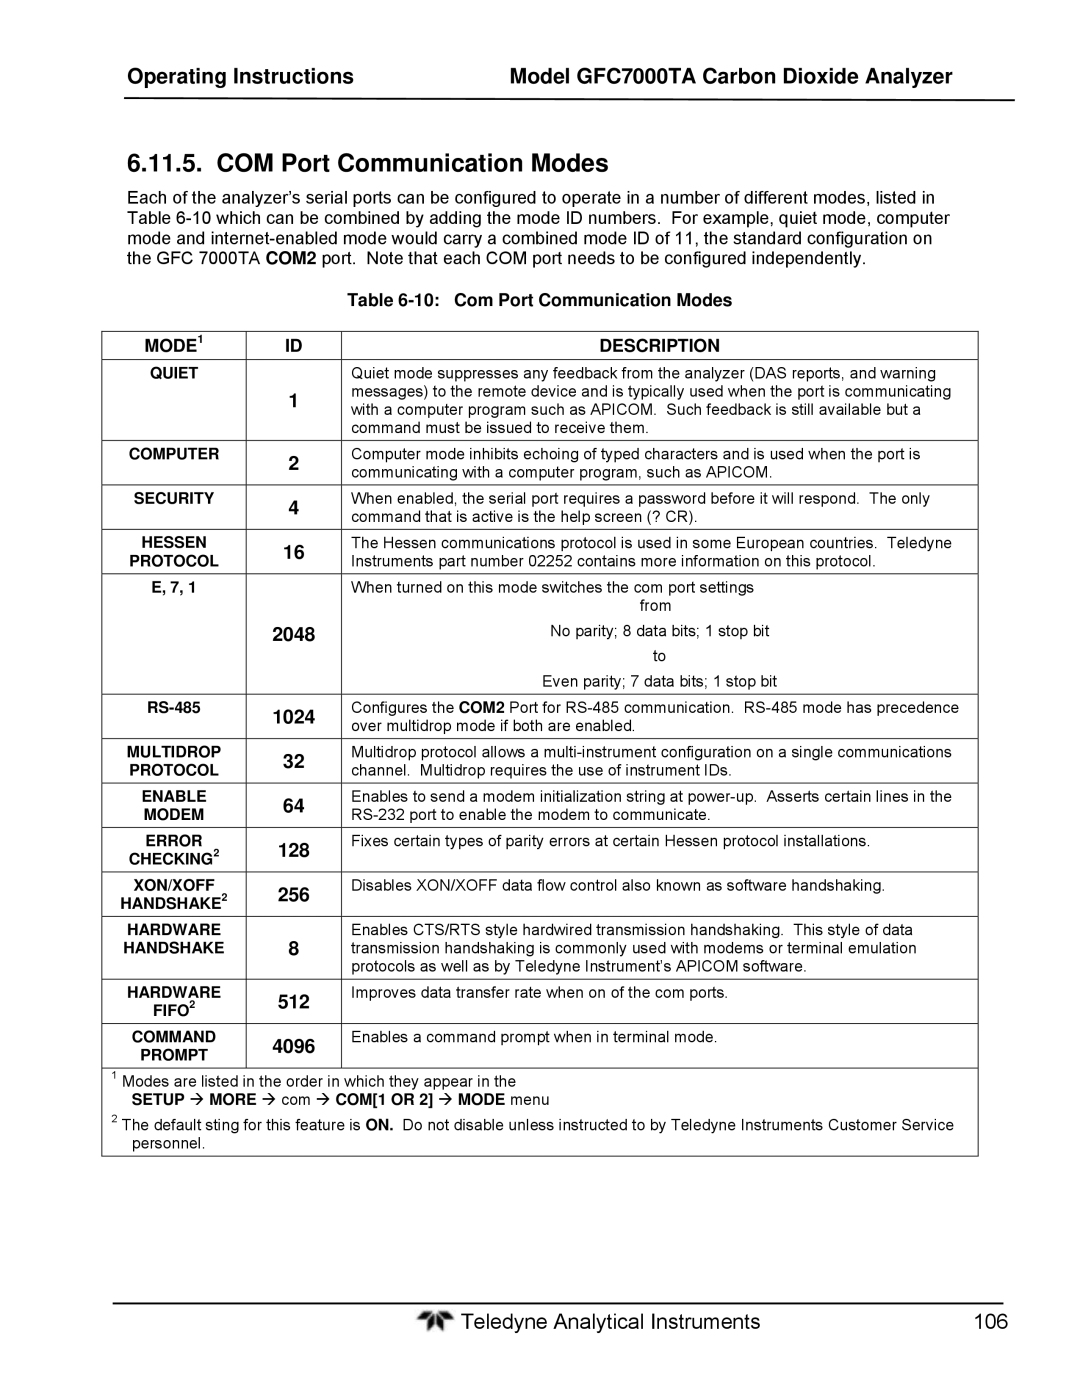 Teledyne gfc 7000ta operation manual COM Port Communication Modes, Com Port Communication Modes, MODE1 Description 